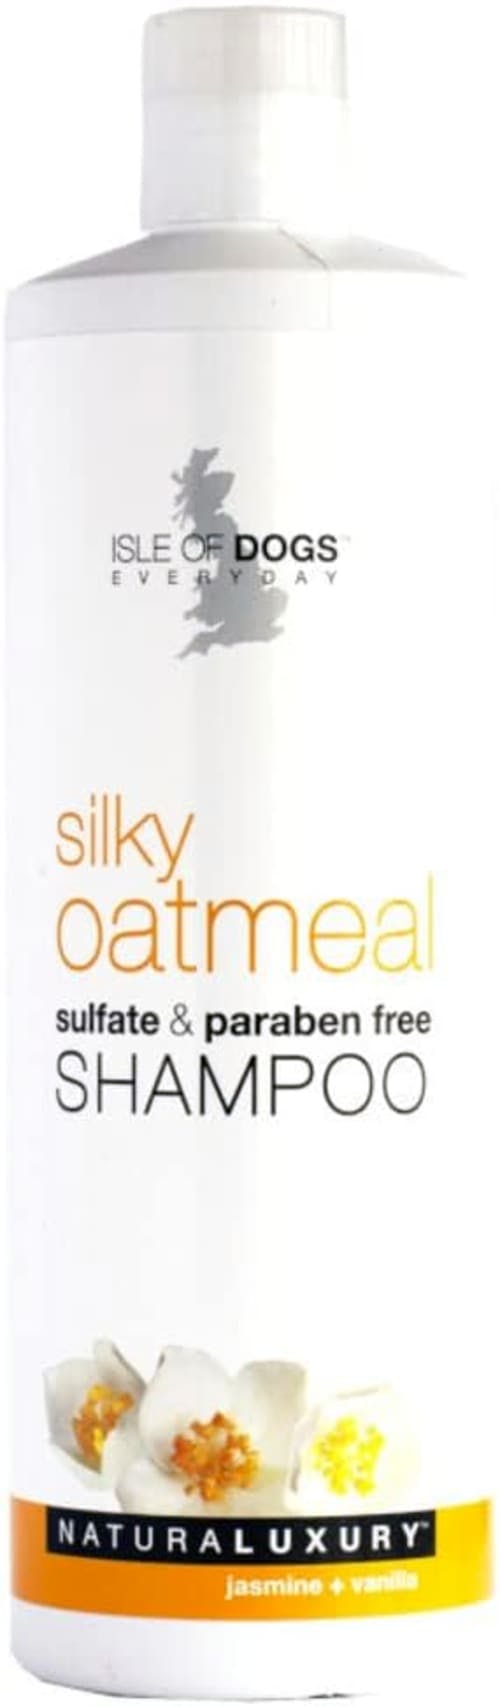 Isle of Dogs Soft Coat Oatmeal Dog Shampoo review